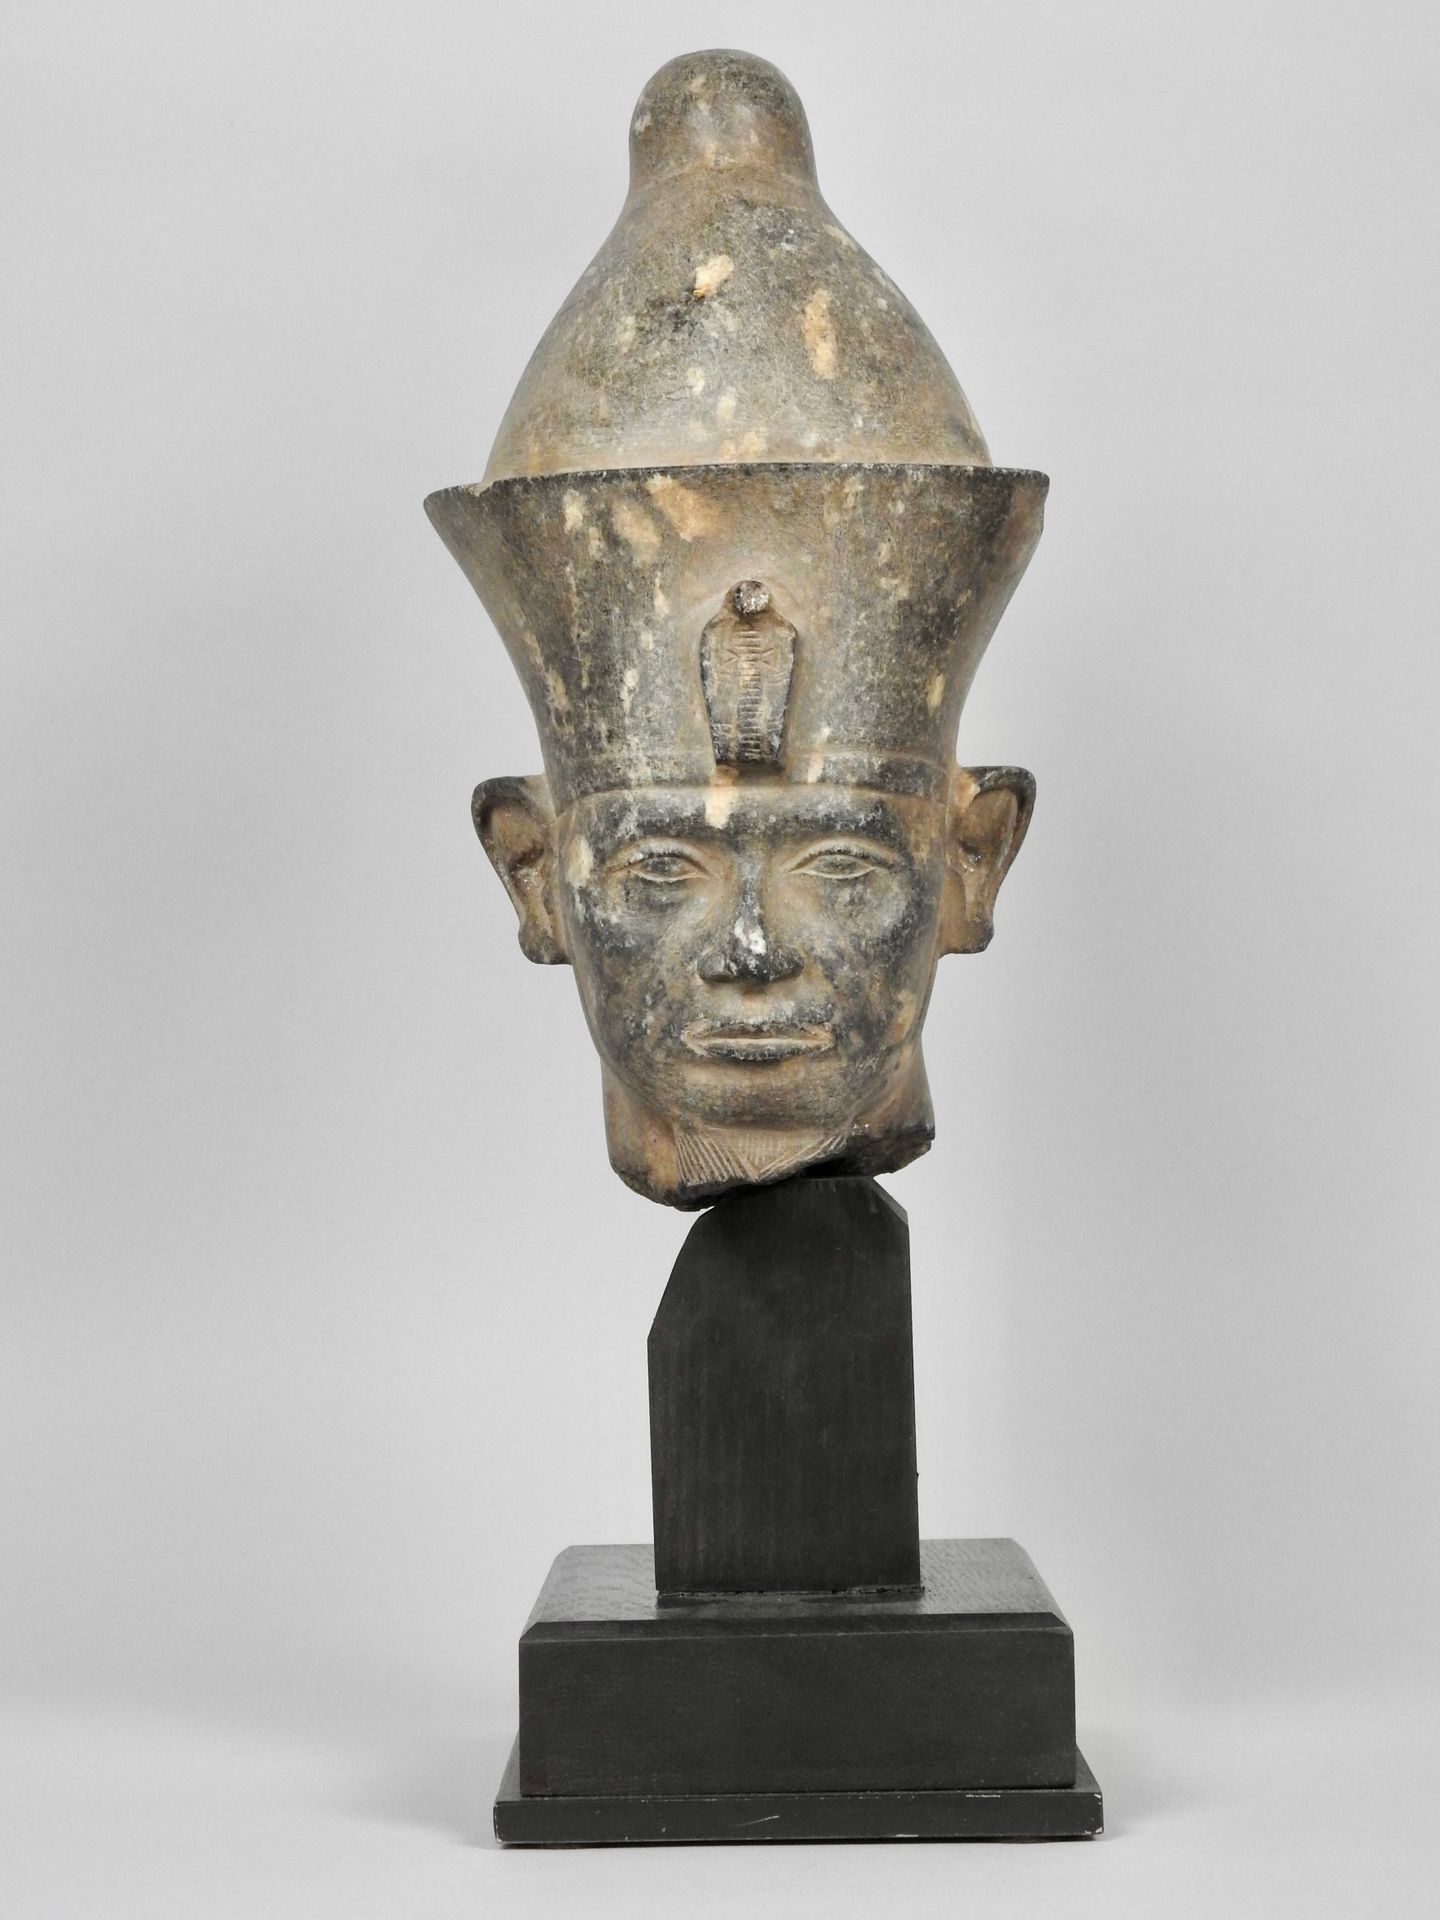 Null 中王国风格的第12王朝法老Sesostris III的头像

有斑点的内源性刻石

高24厘米